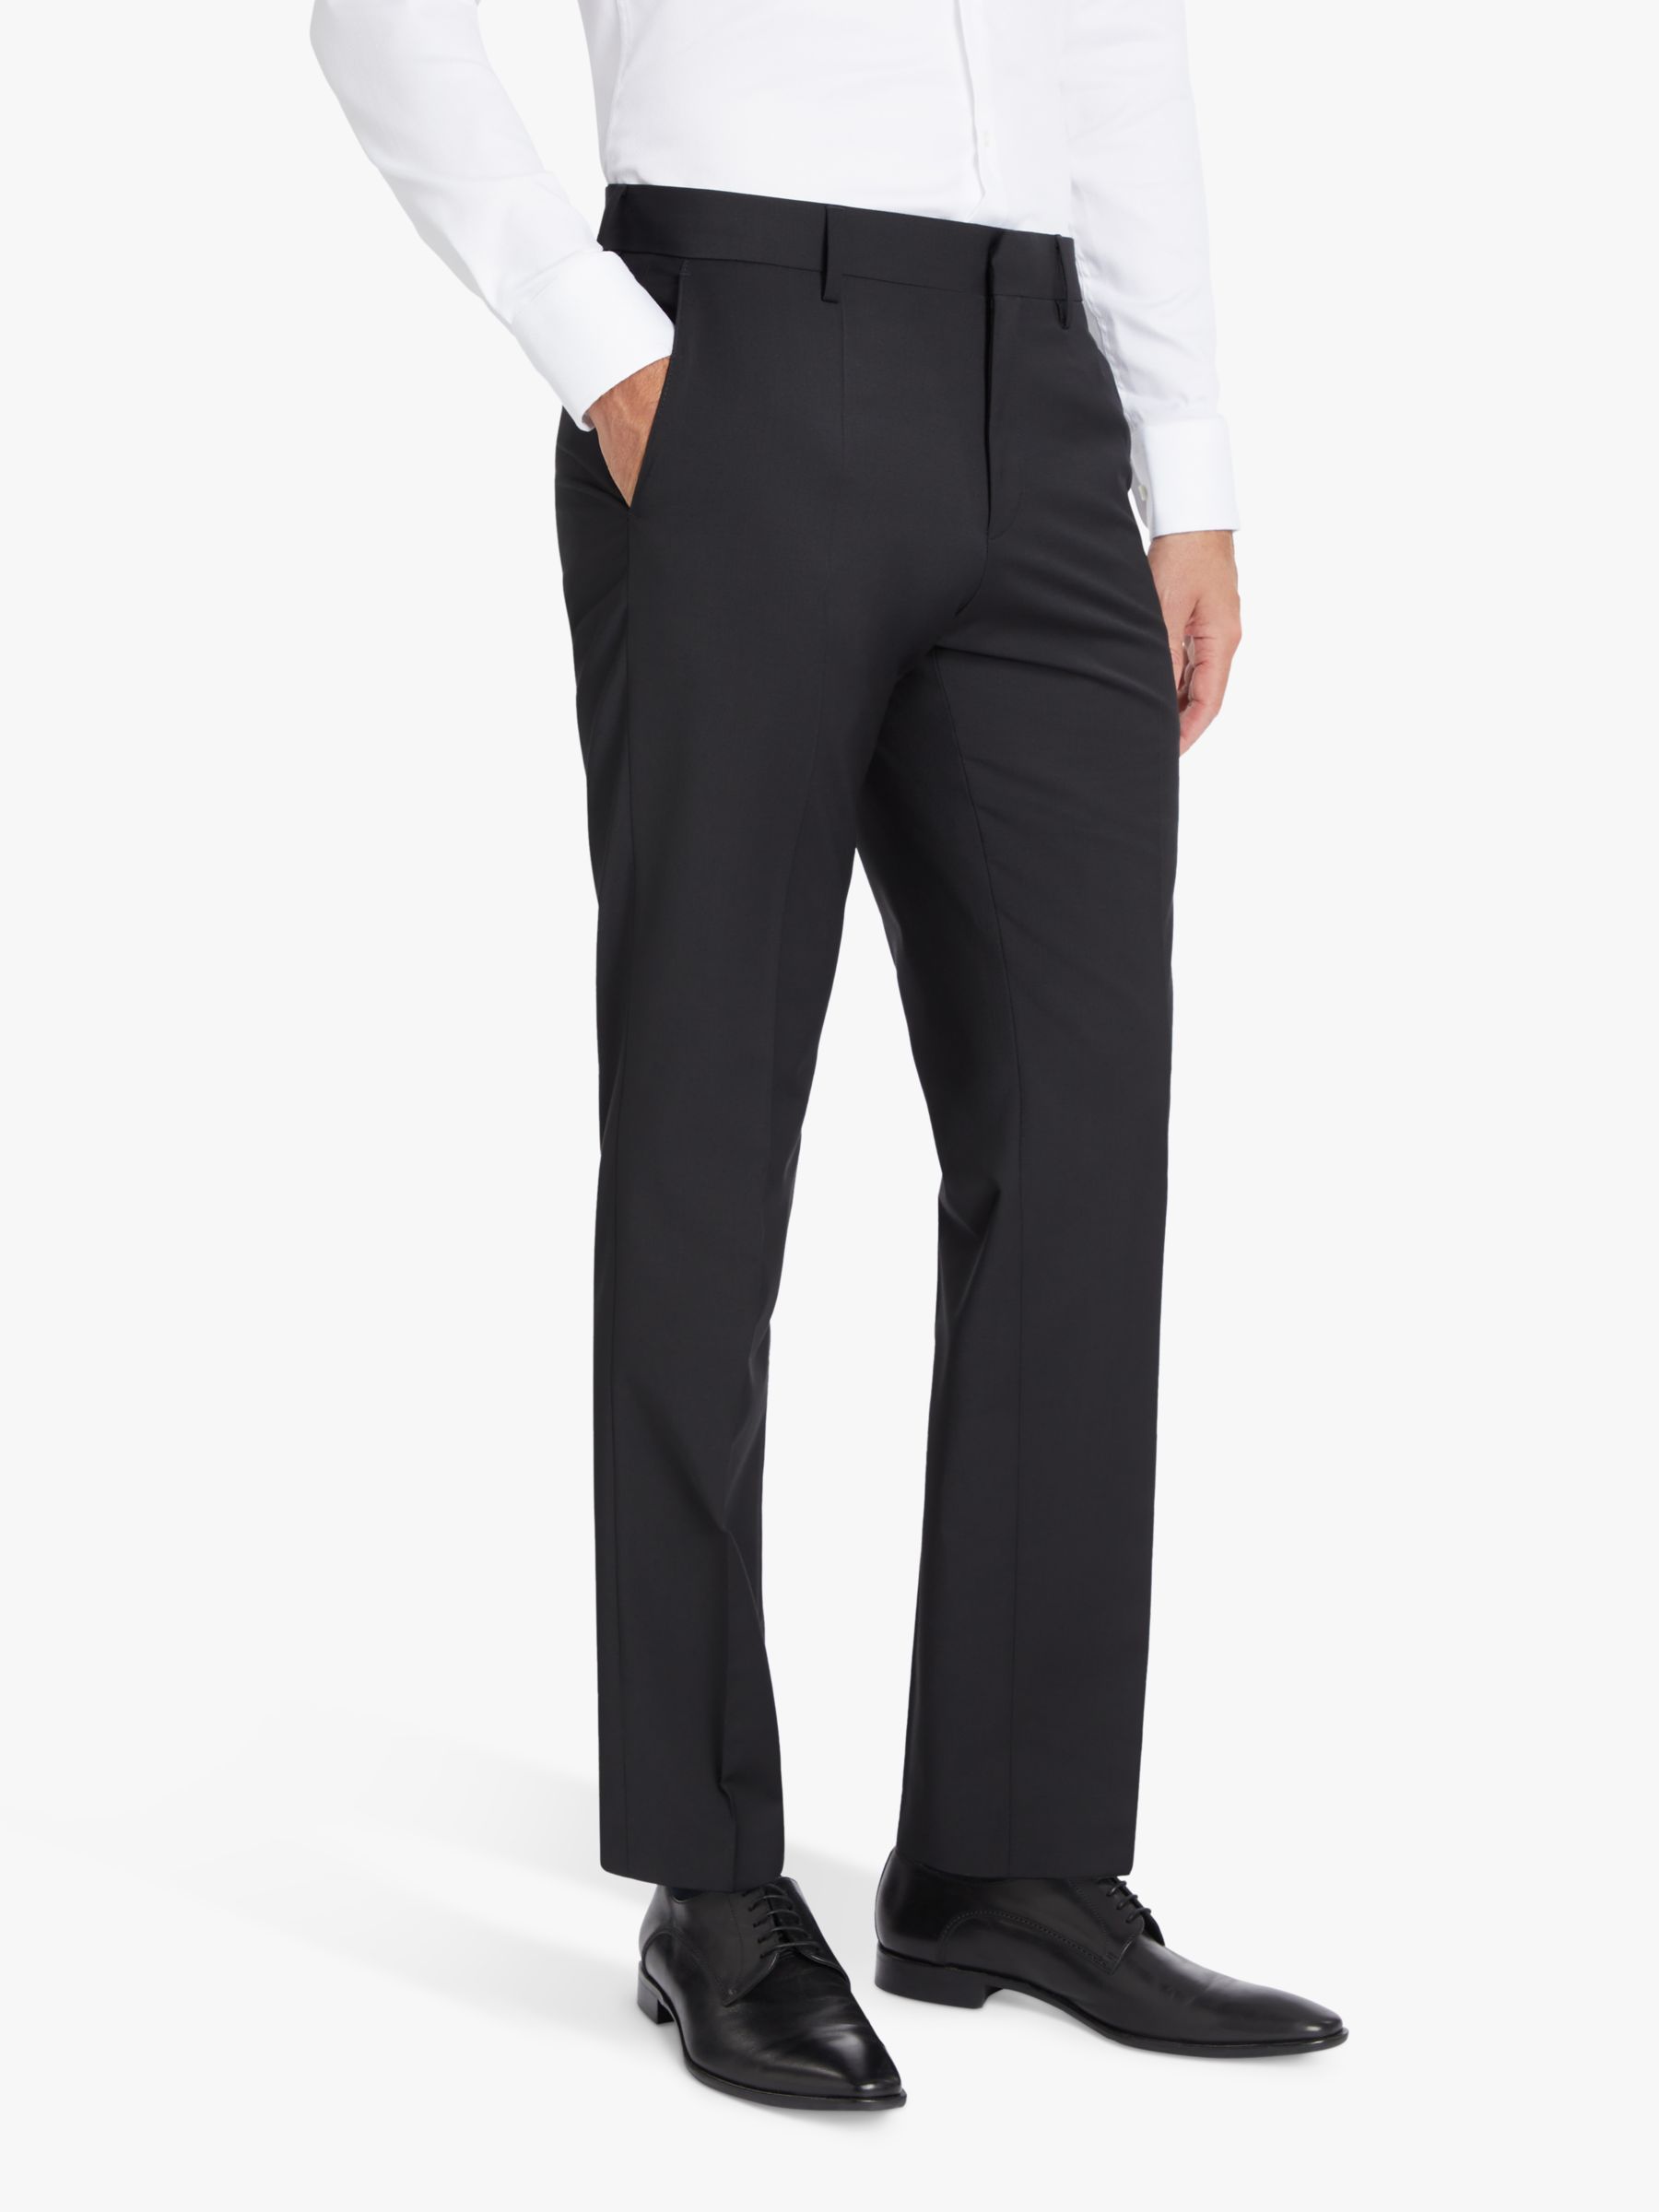 BOSS Genius Virgin Wool Slim Fit Suit Trousers, Black at John Lewis ...